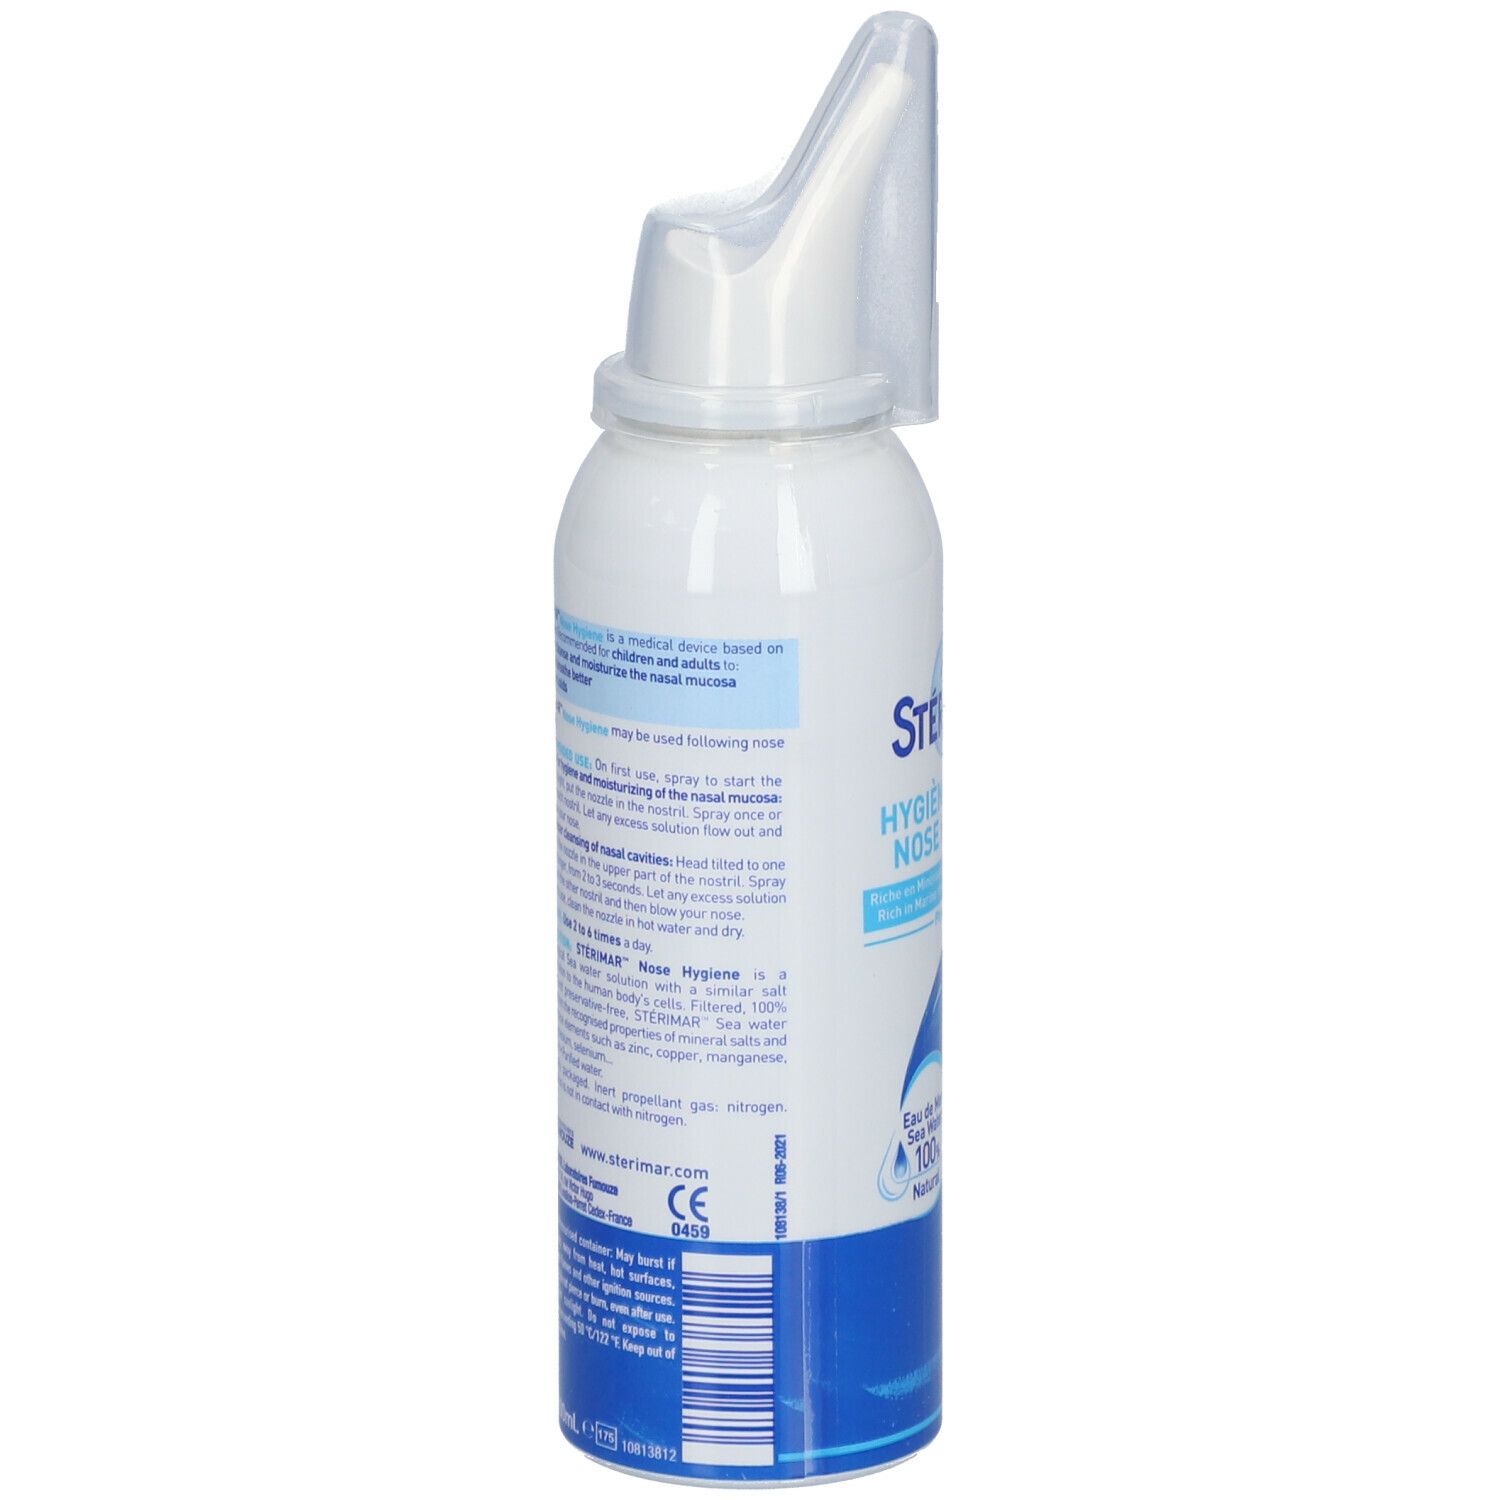 Sterimar eau de mer solution nasale